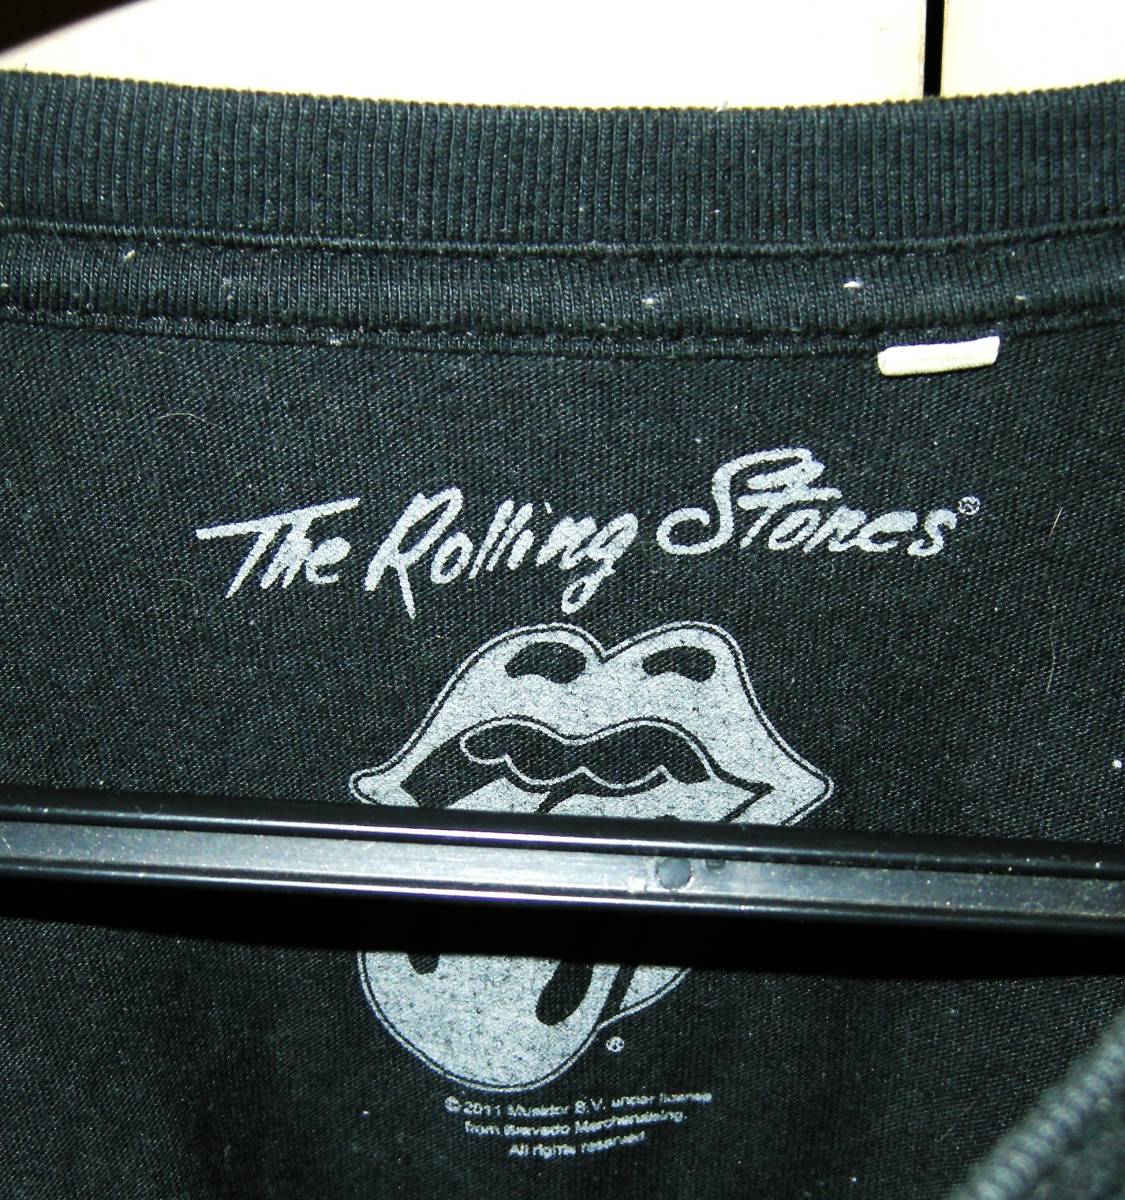 RollingStones low кольцо Stone z распроданный футболка 1981 Северная Америка Tour LL